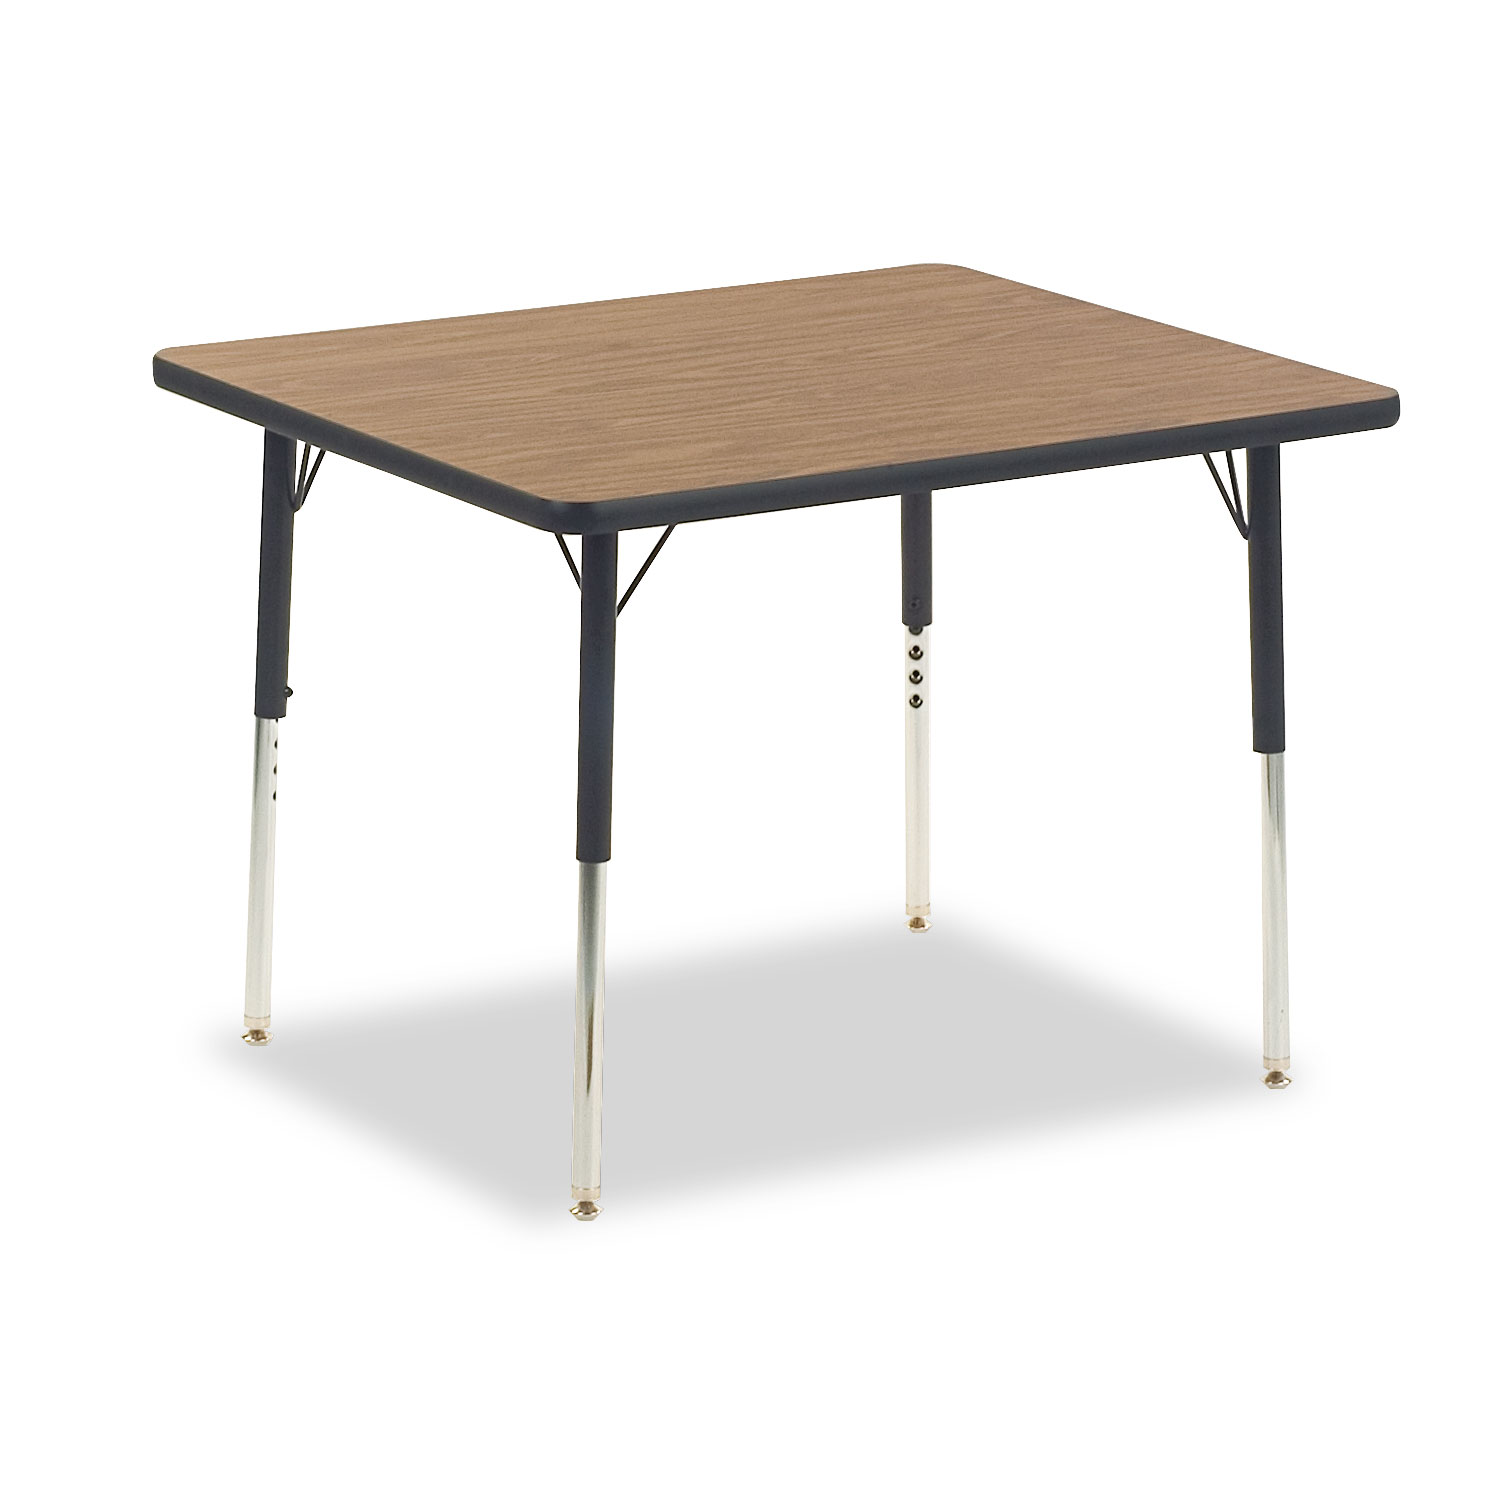 4000 Series Rectangular Activity Table, 30w x 36d x 30h, Medium Oak/Chrome